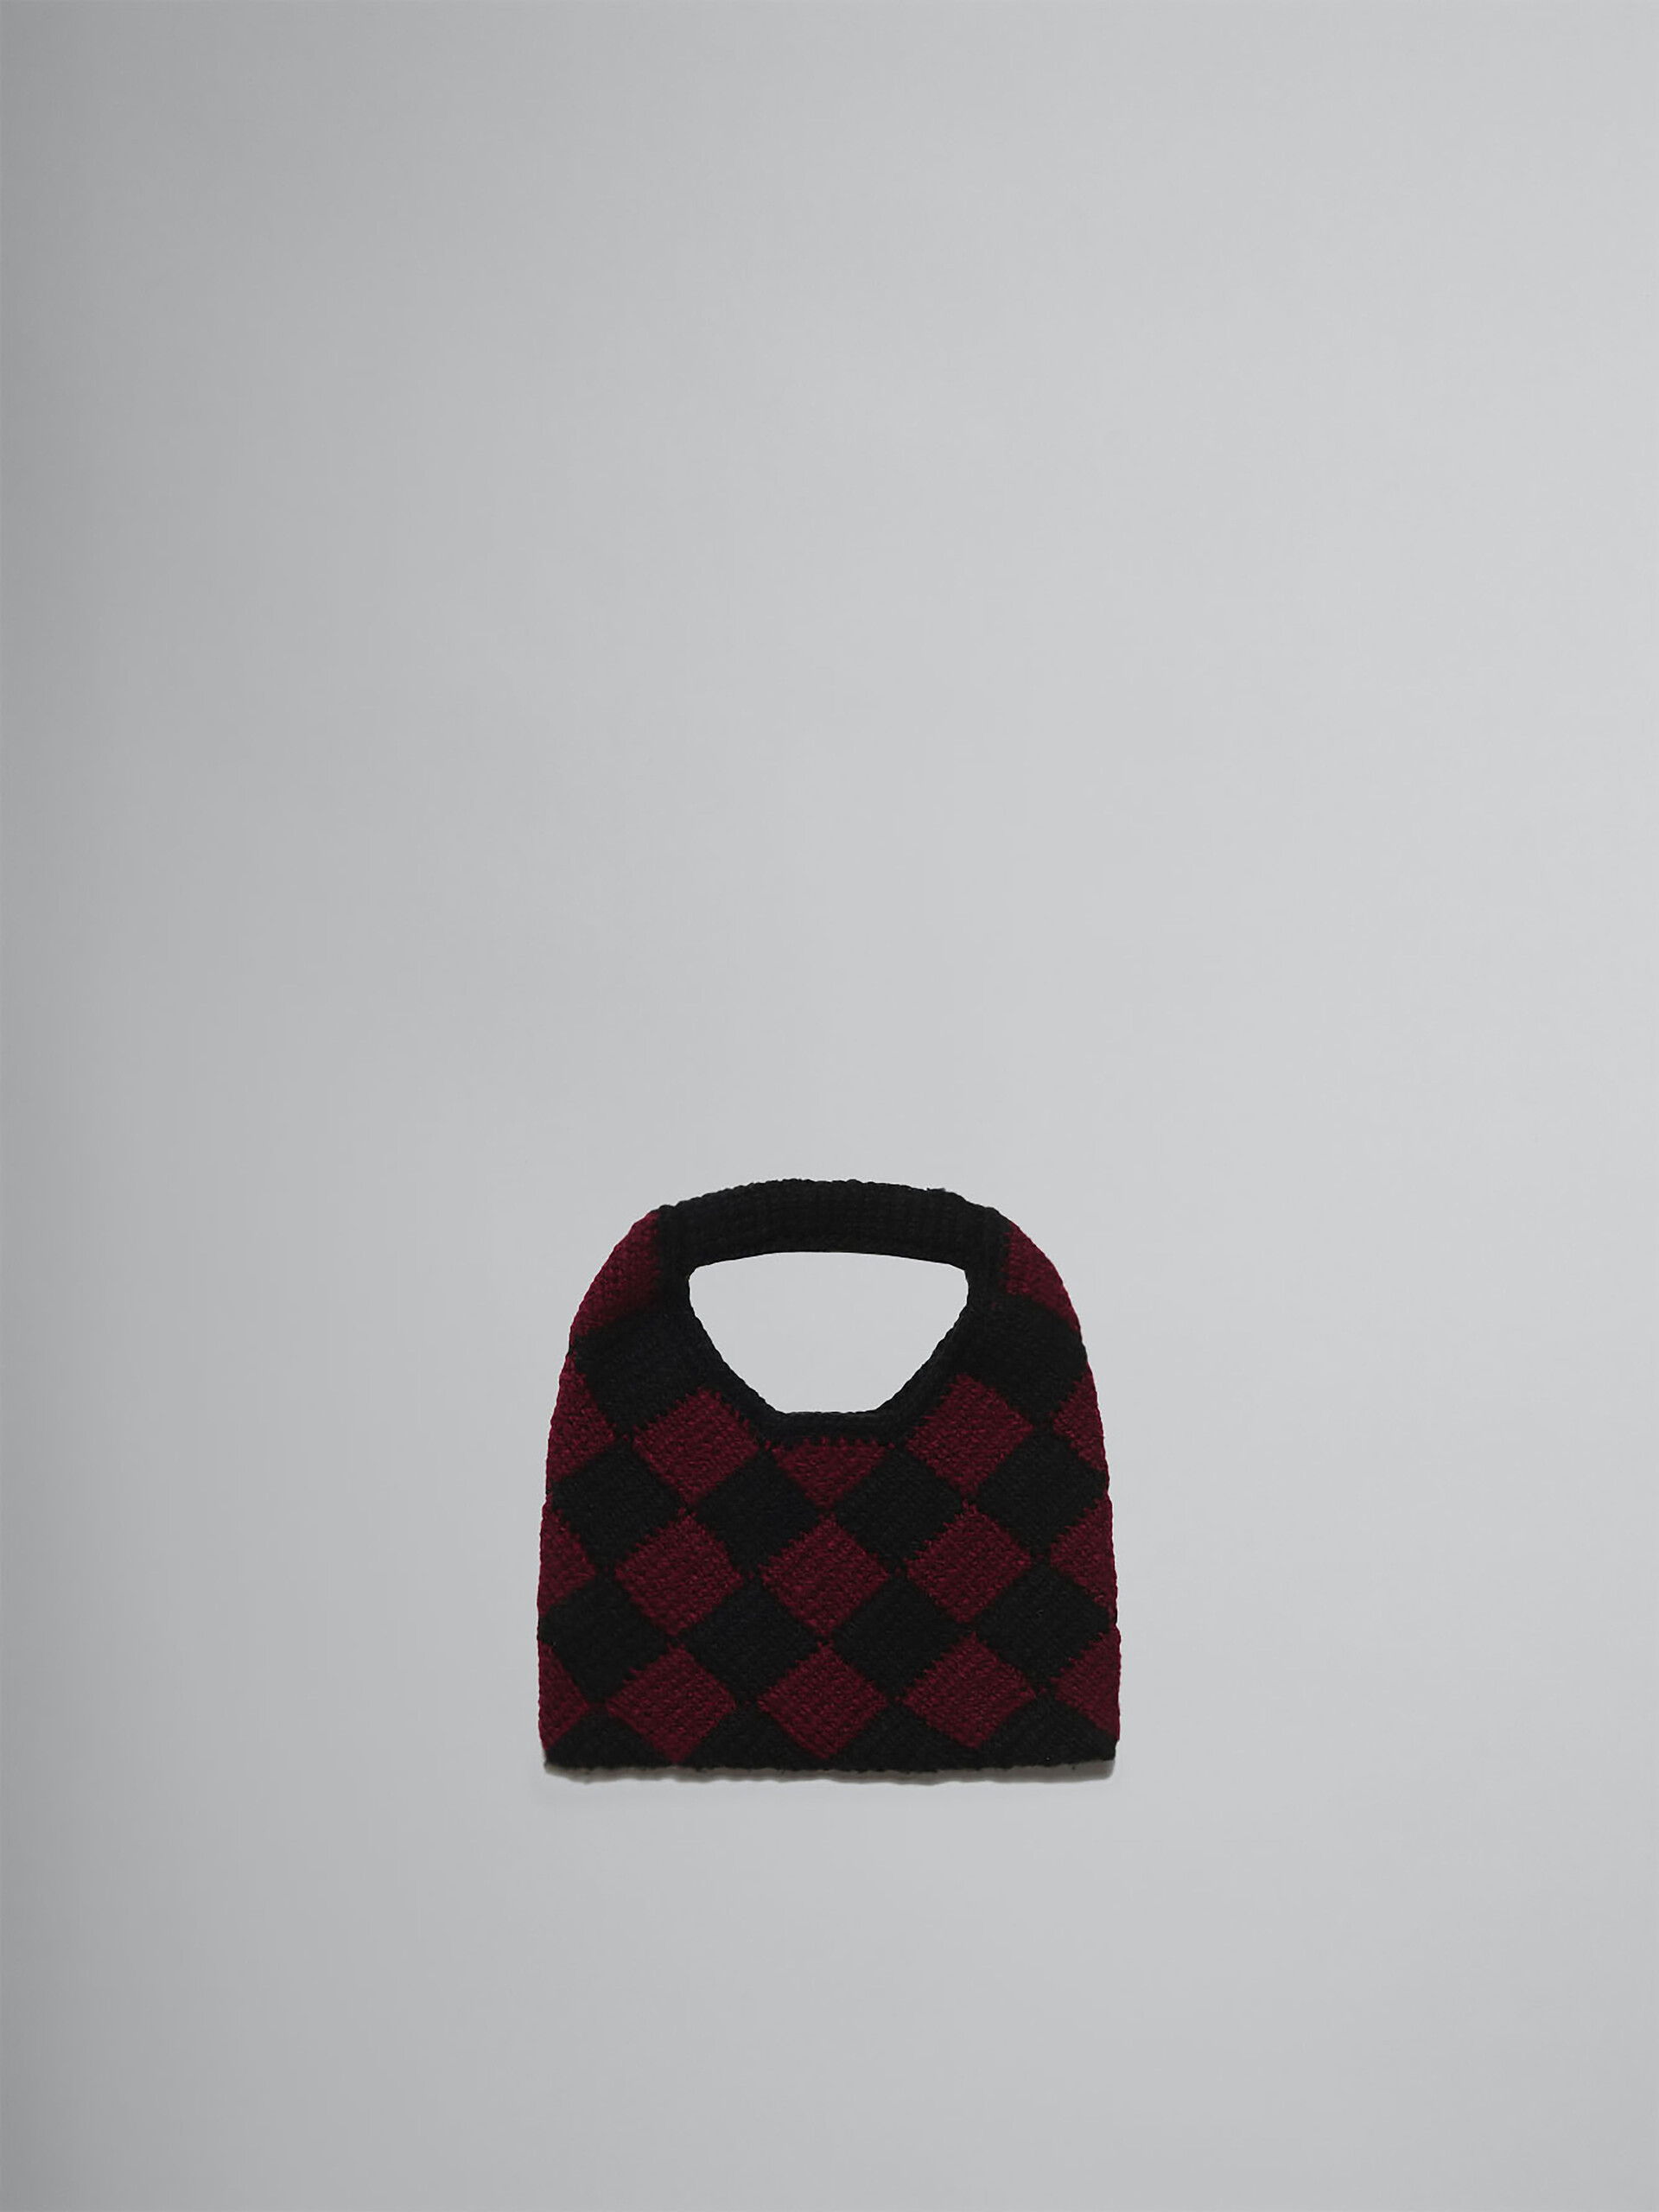 Maroon and black Diamond Crochet bag - Bags - Image 2